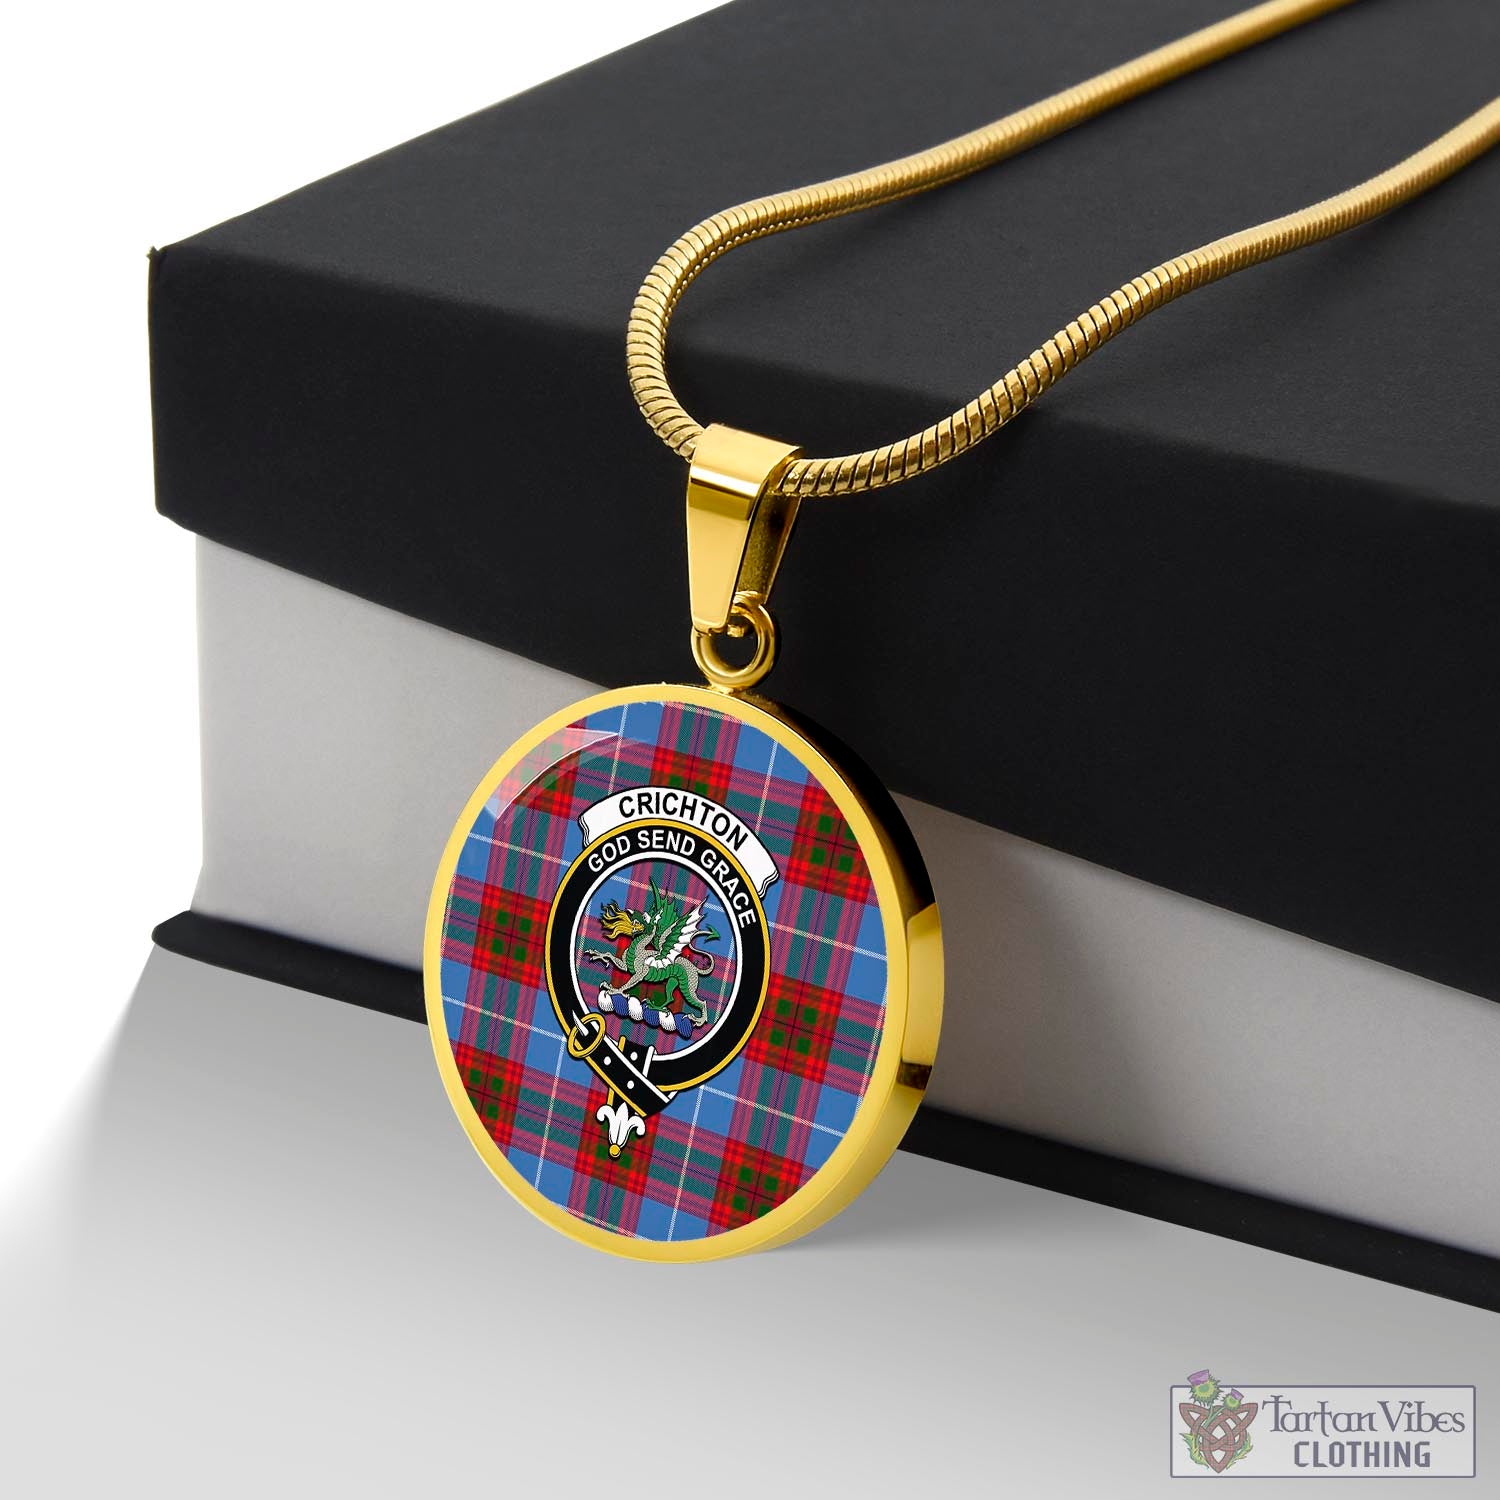 Tartan Vibes Clothing Crichton Tartan Circle Necklace with Family Crest